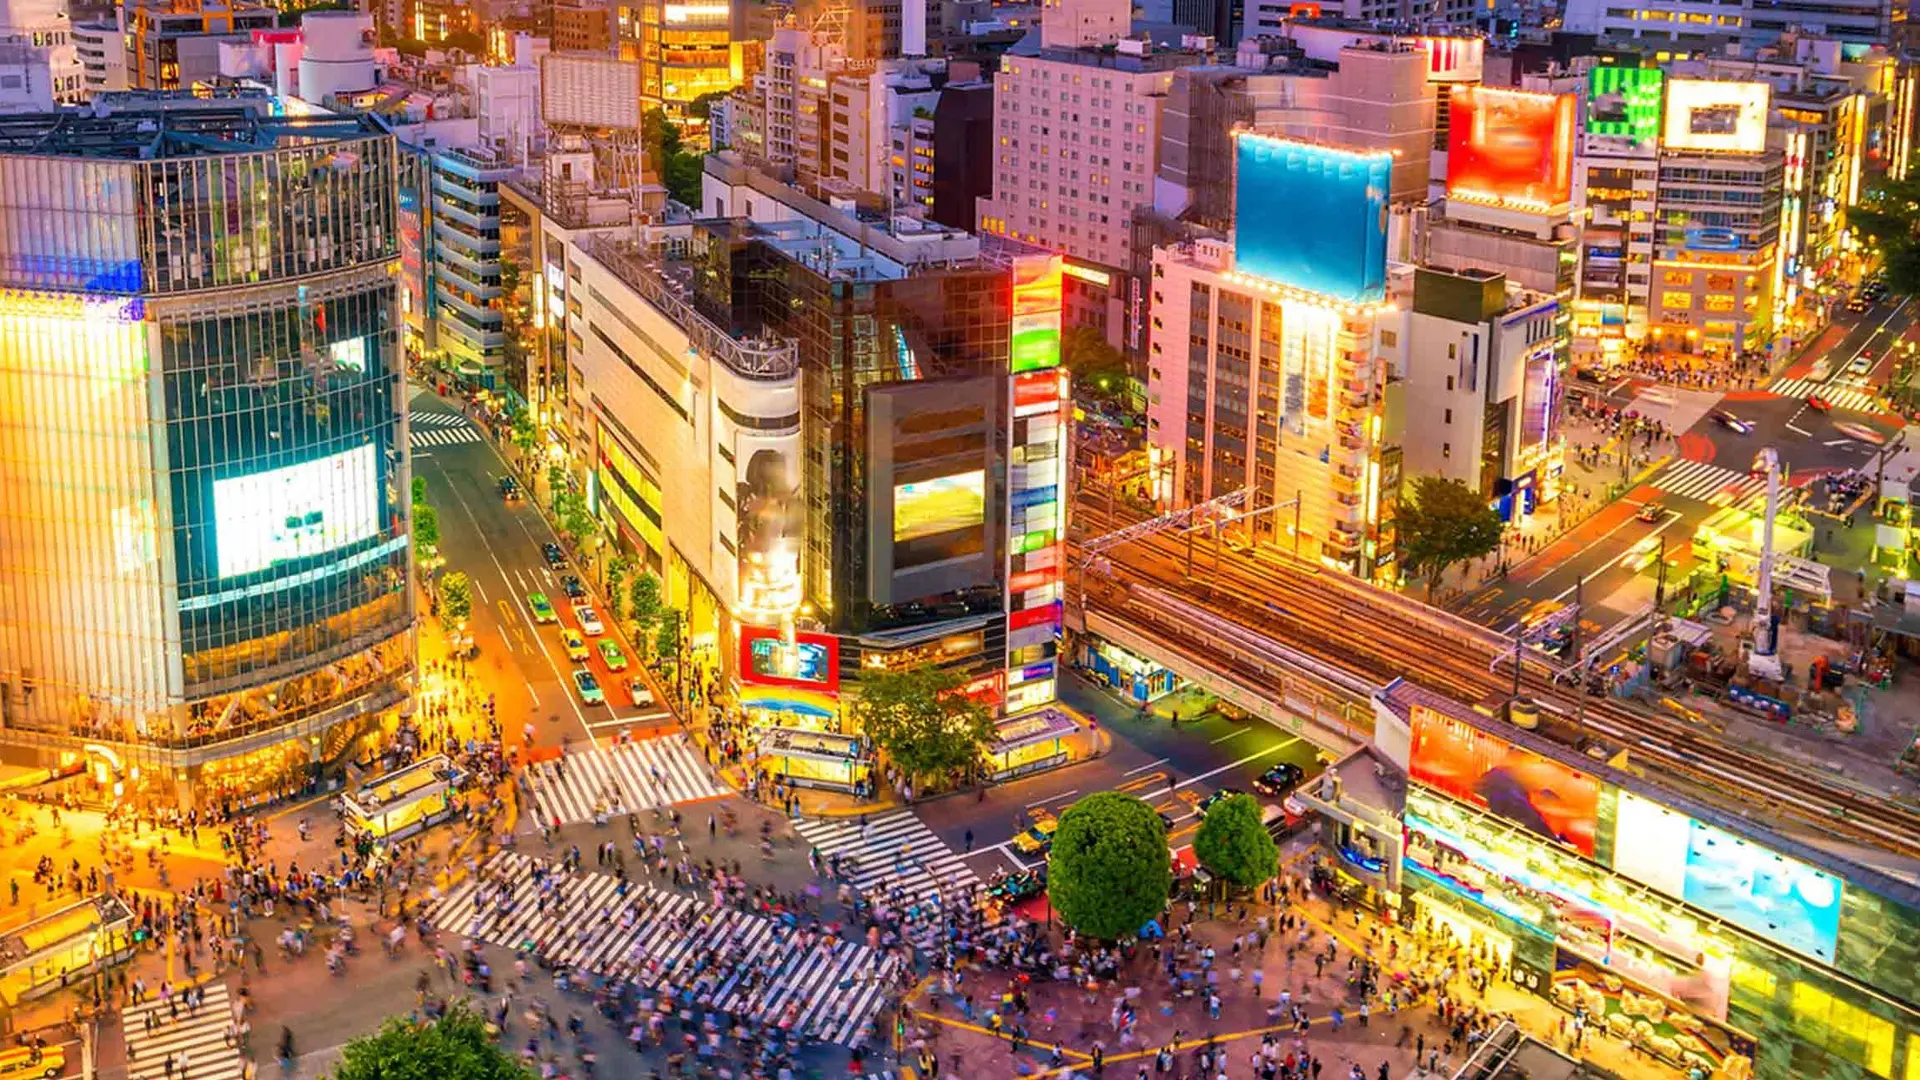 Shibuya Crossing the worlds bussiest street crossing in Tokyo.